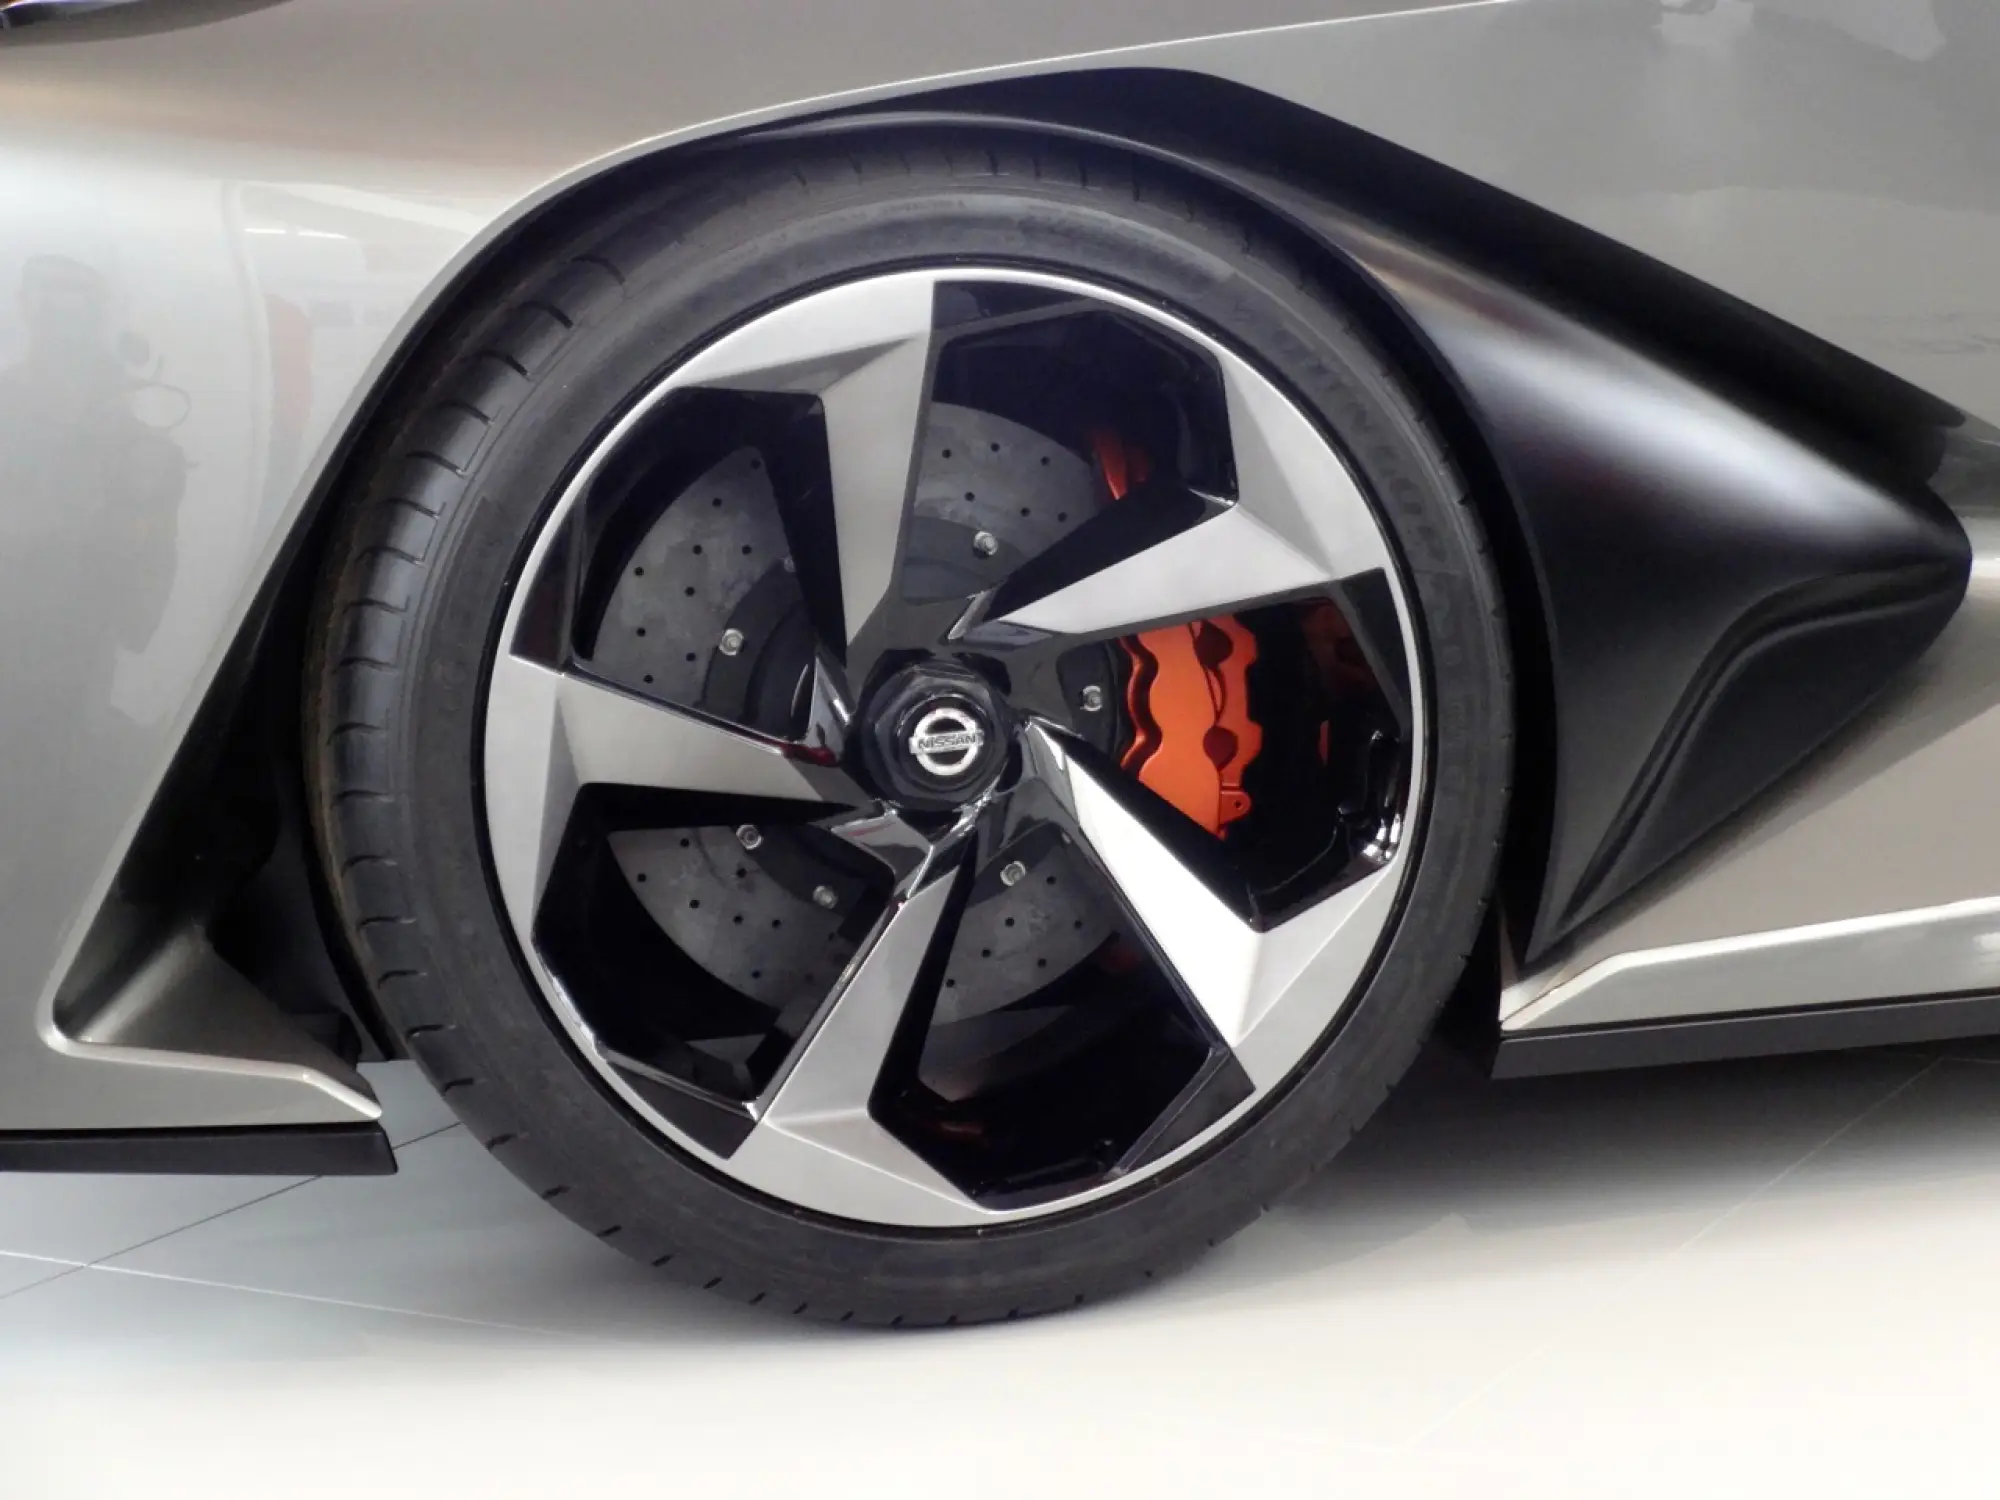 Nissan Concept 2020 Vision Gran Turismo - Goodwood 2014 - 3